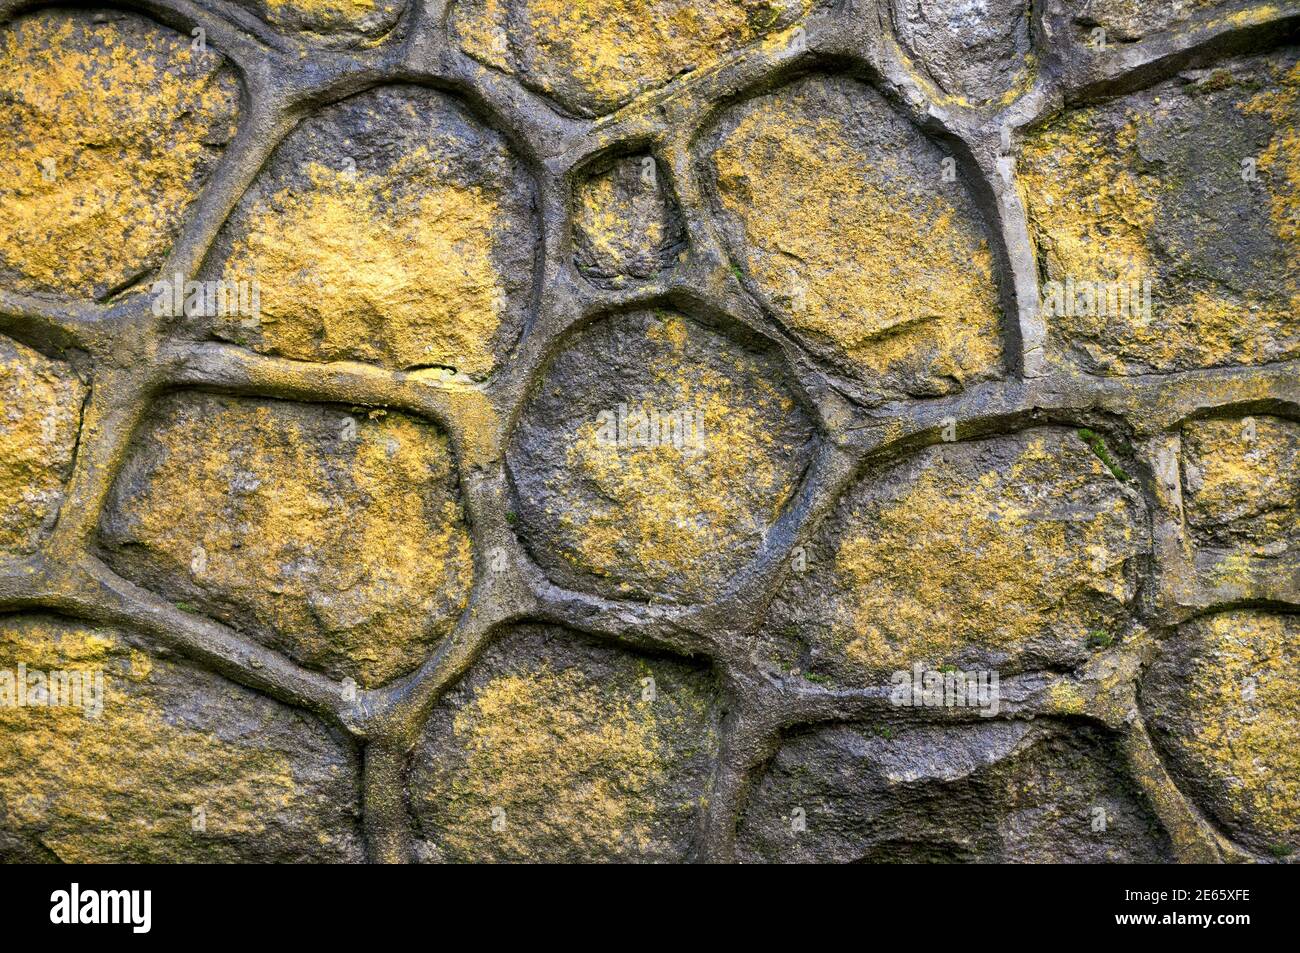 Yellow lichen growing on a grey granite mosaic stone wall Stock Photo